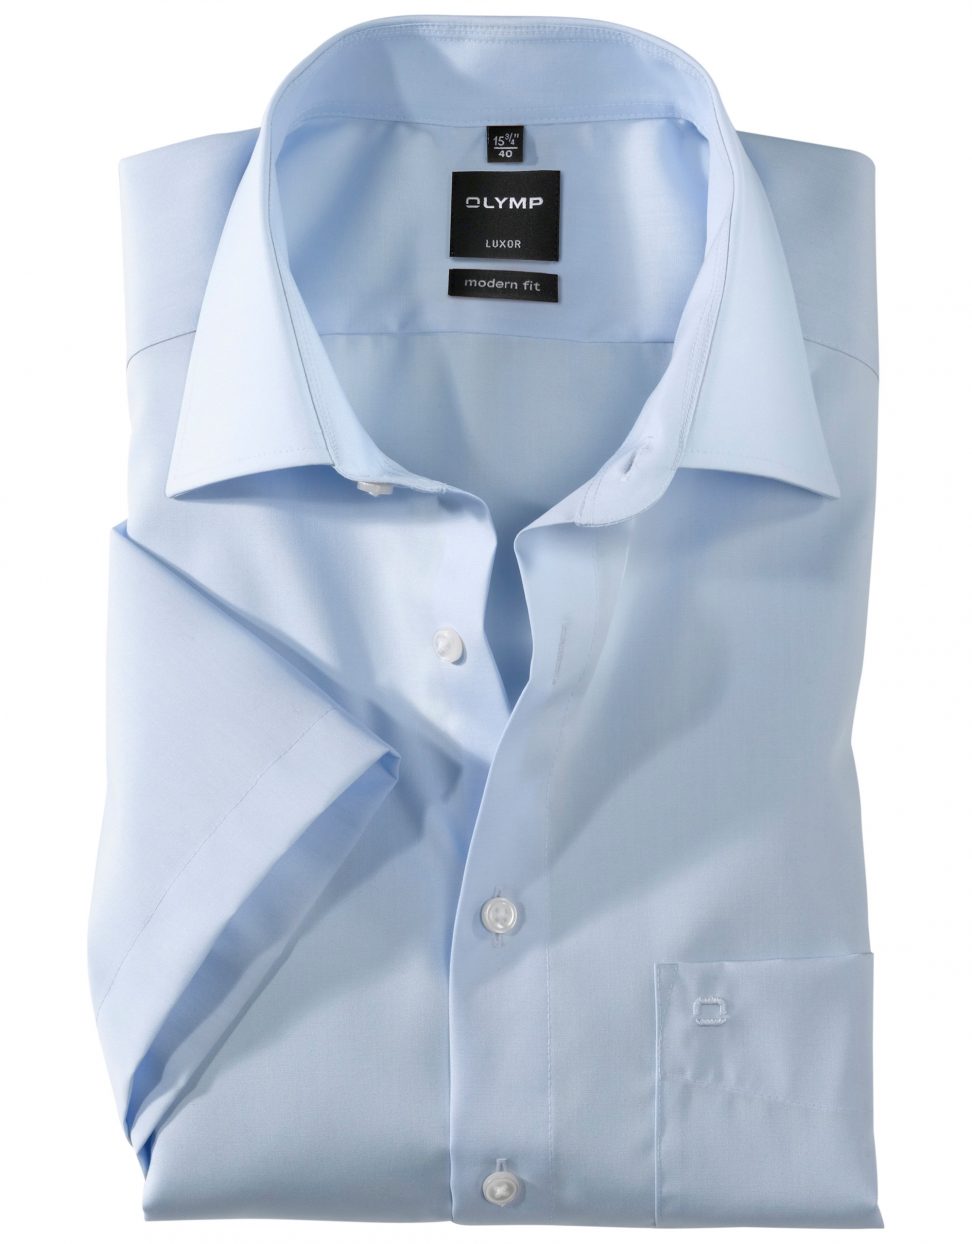 Koszula OLYMP Luxor, modern fit, krótki rękaw,błękitna/ 03001215